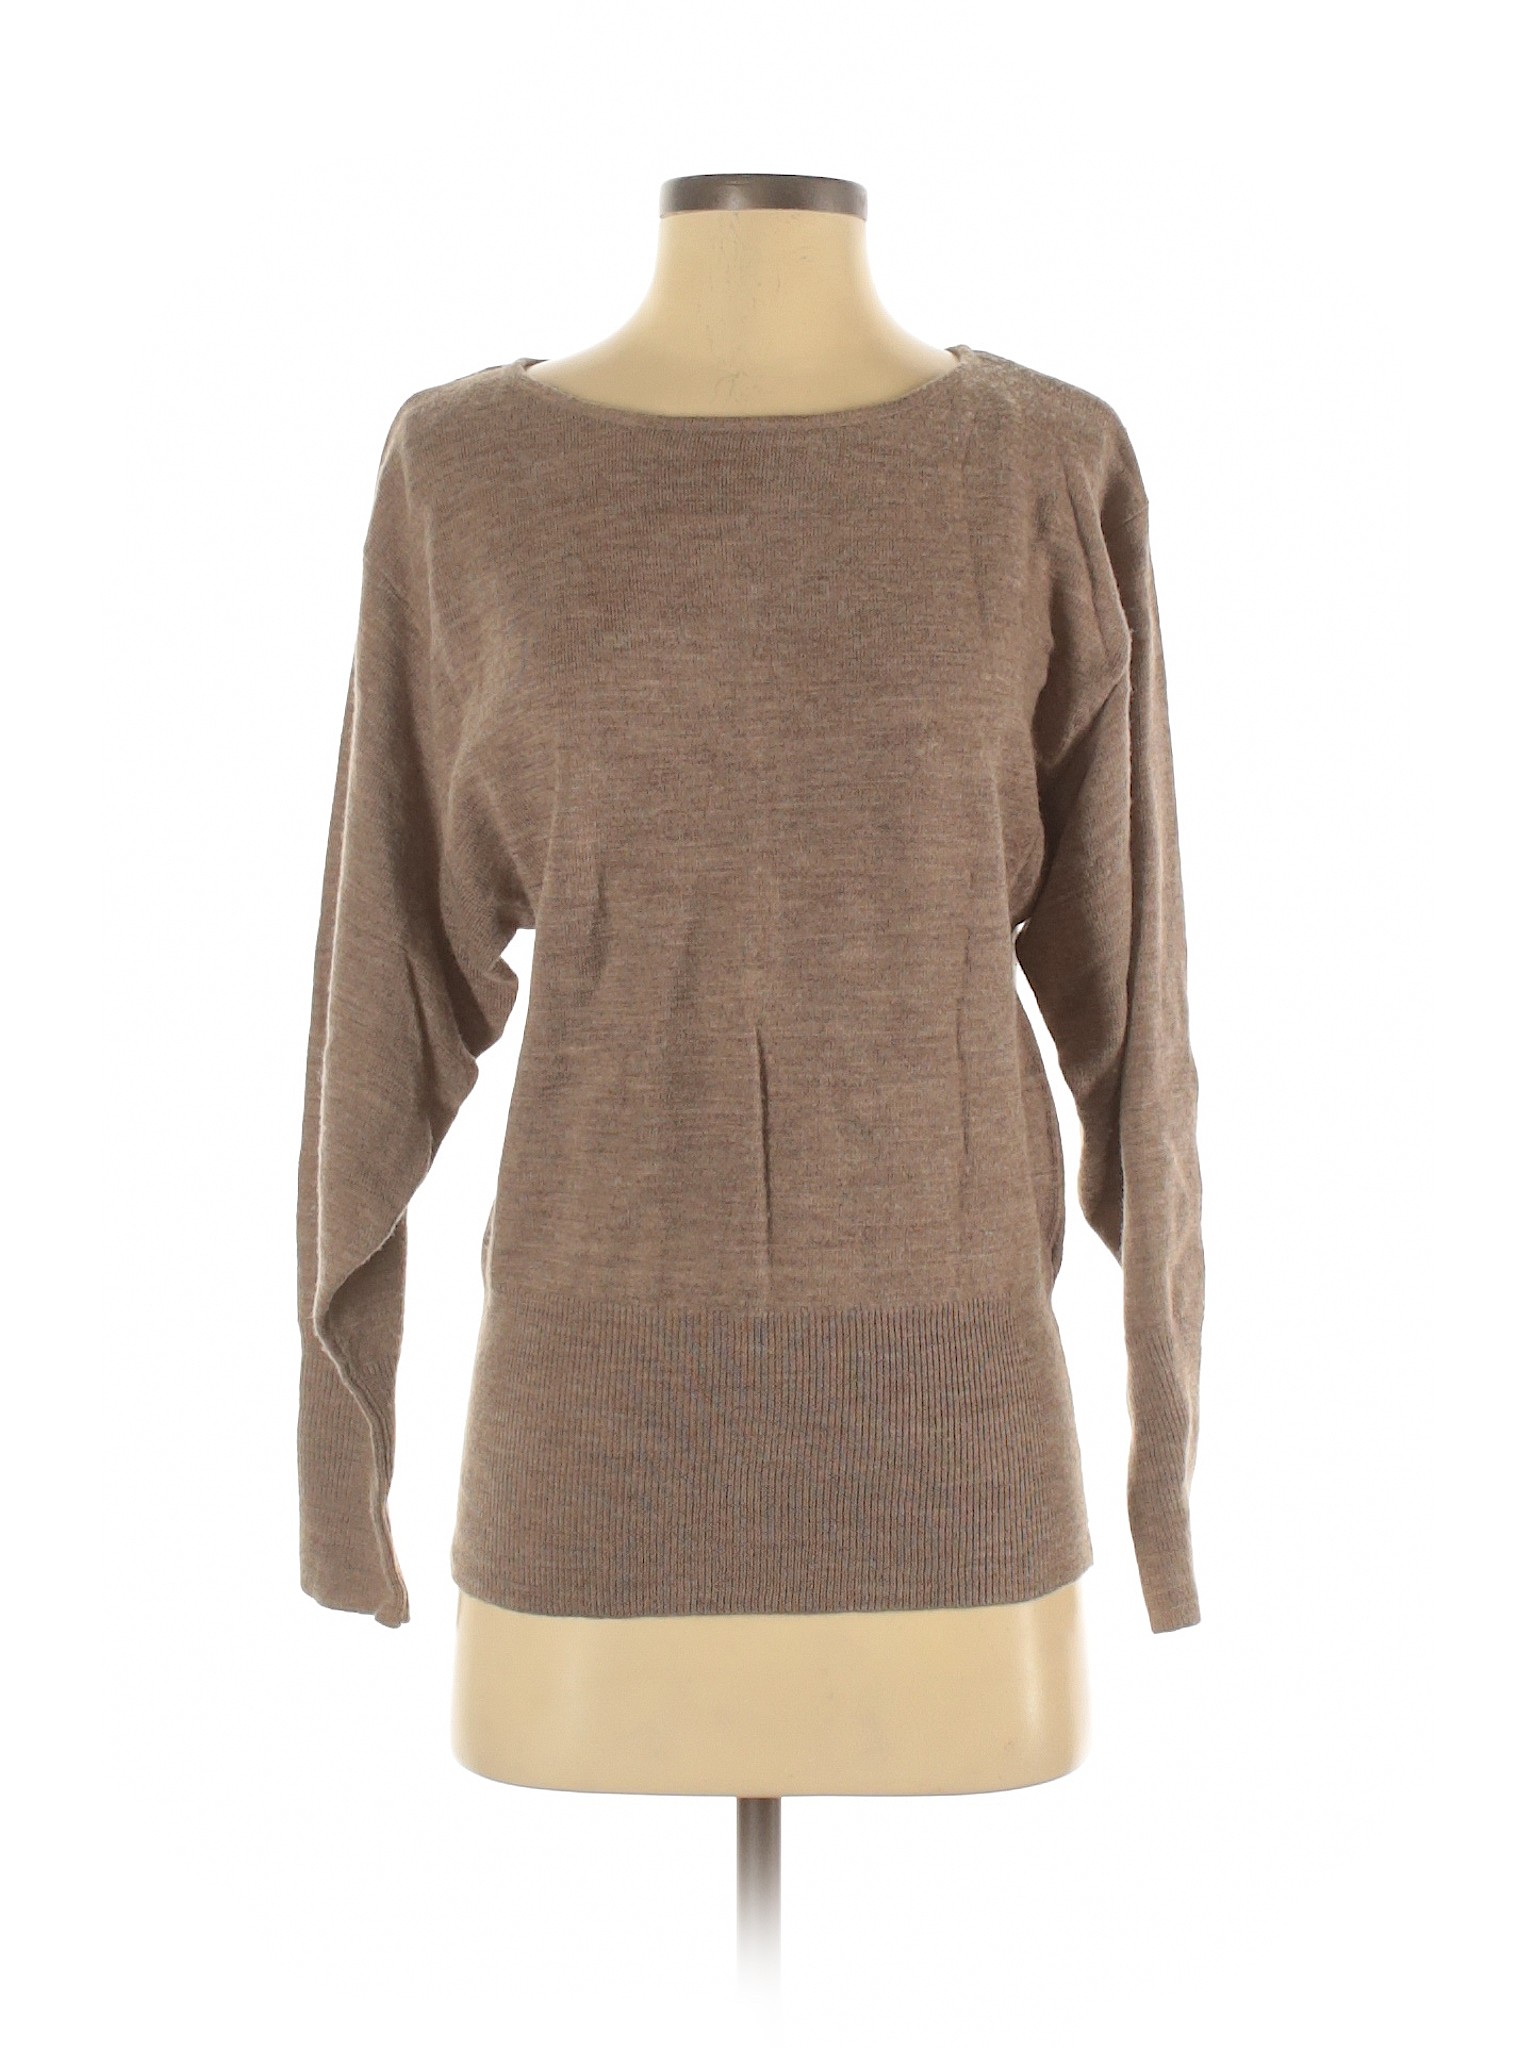 Cynthia Rowley TJX Women Brown Wool Pullover Sweater S | eBay